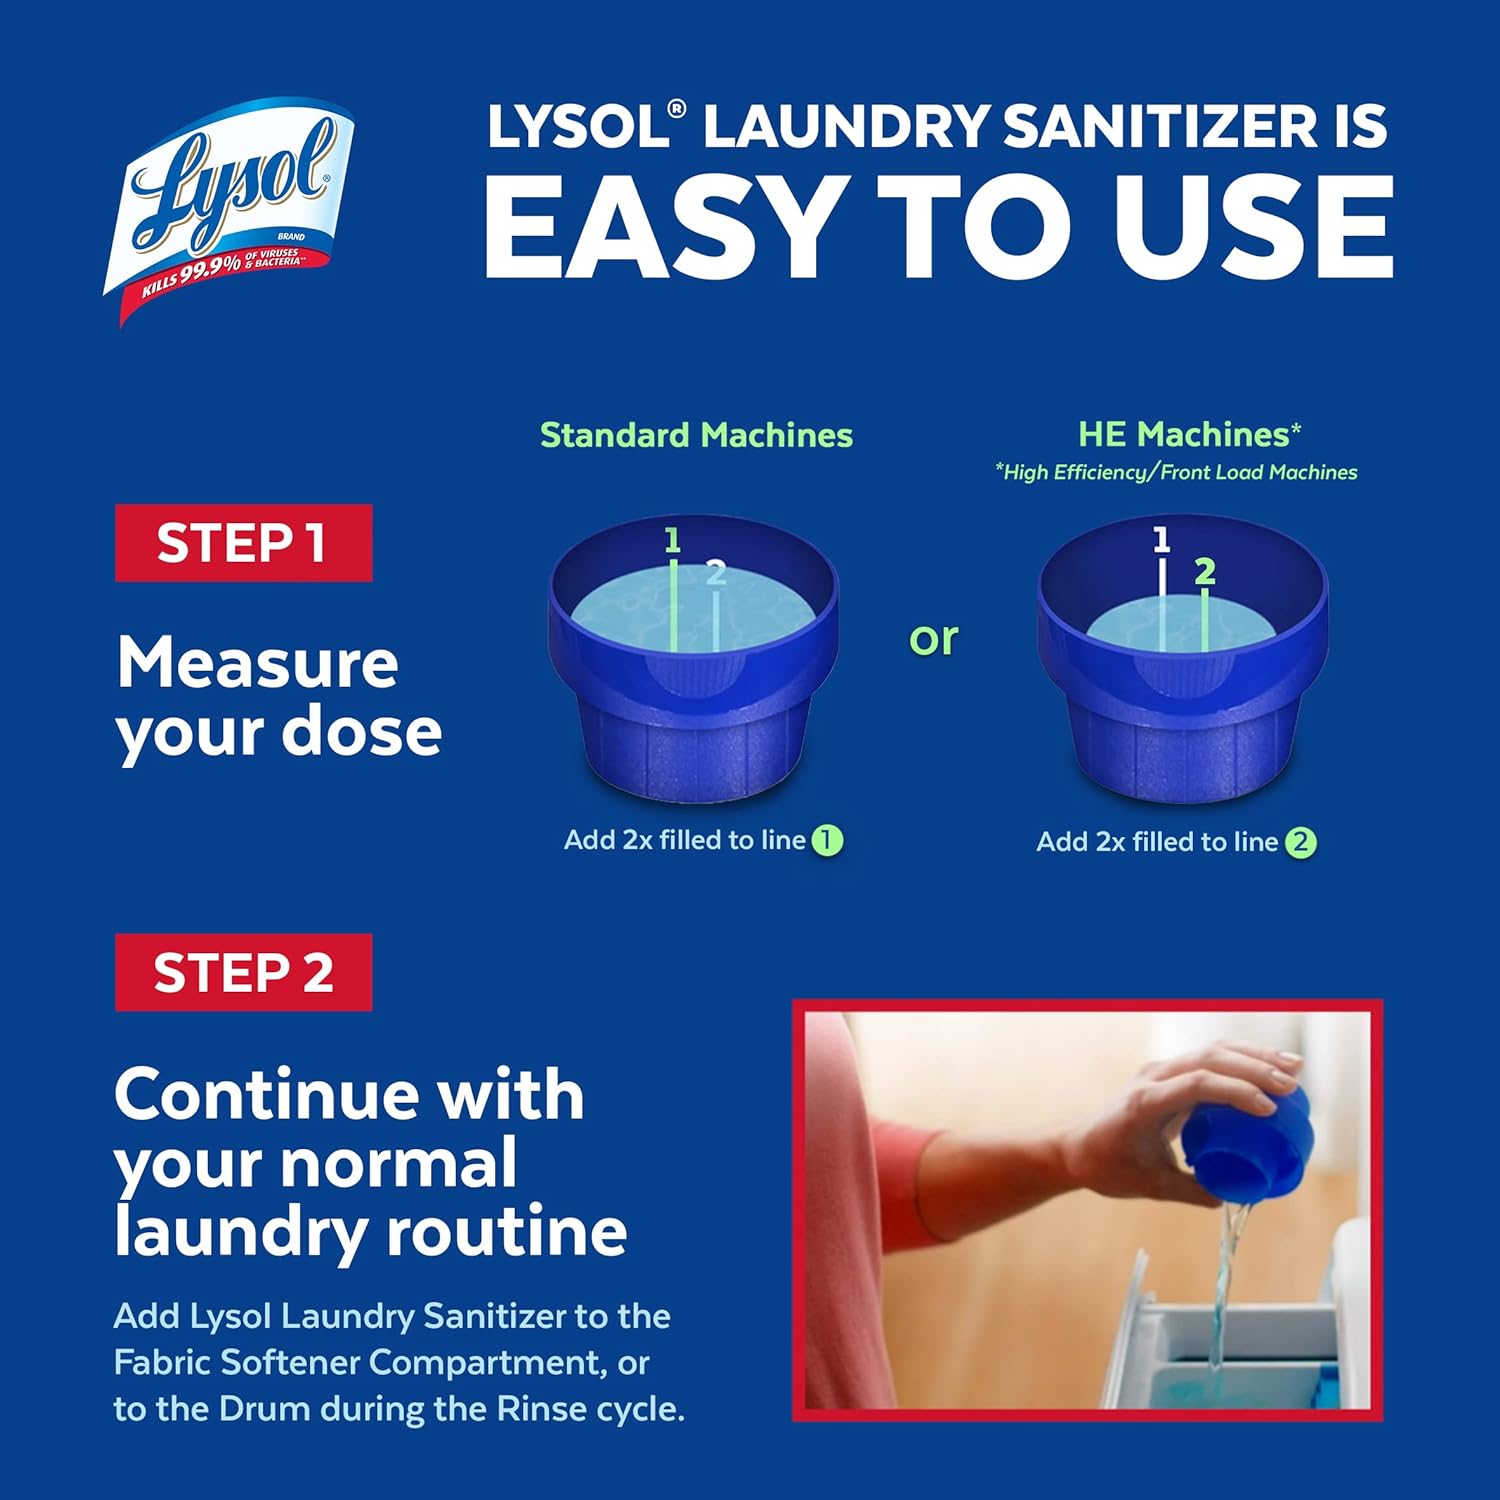 Lysol Laundry Sanitizer Additive, Sanitizing Liquid for Clothes and Linens, Eliminates Odor Causing Bacteria, Crisp Linen, 41oz